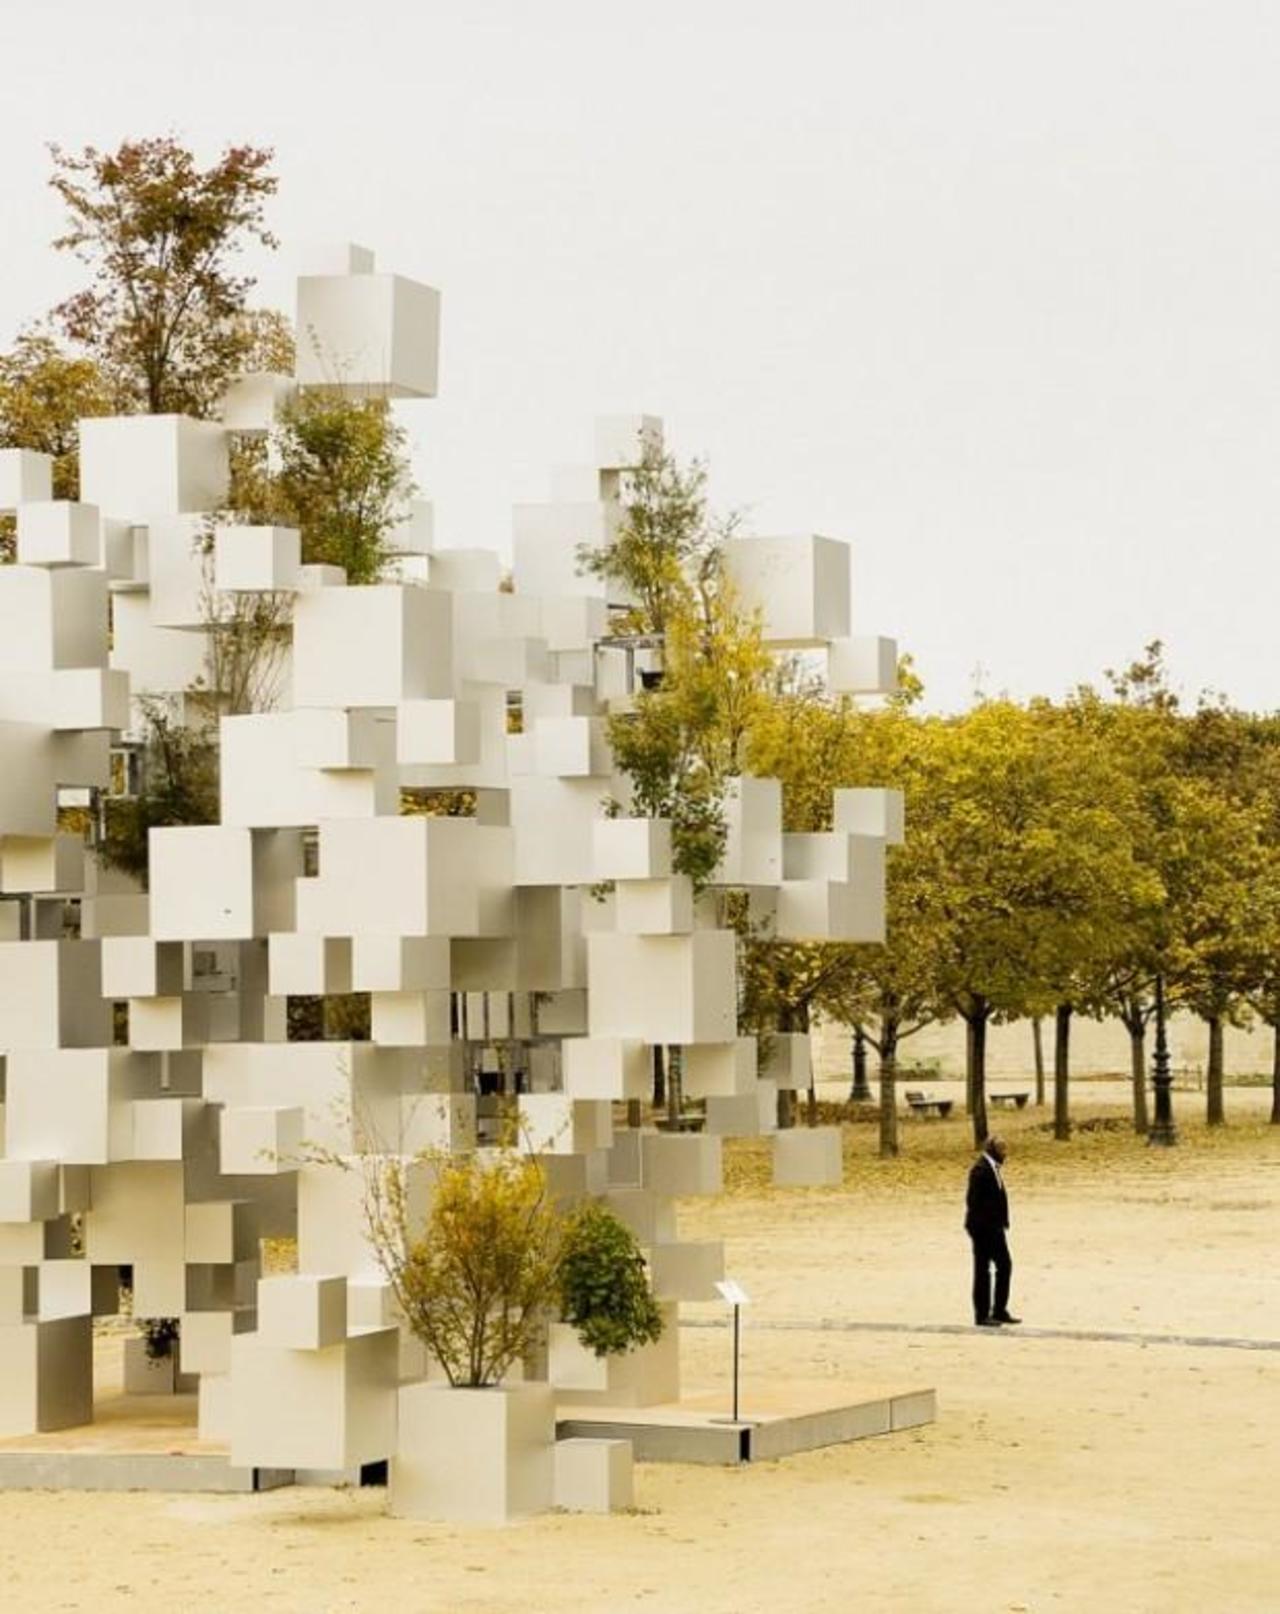 Amazing Installation in Paris for FIAC #art #photo #design http://t.co/WmGtZZTUQO